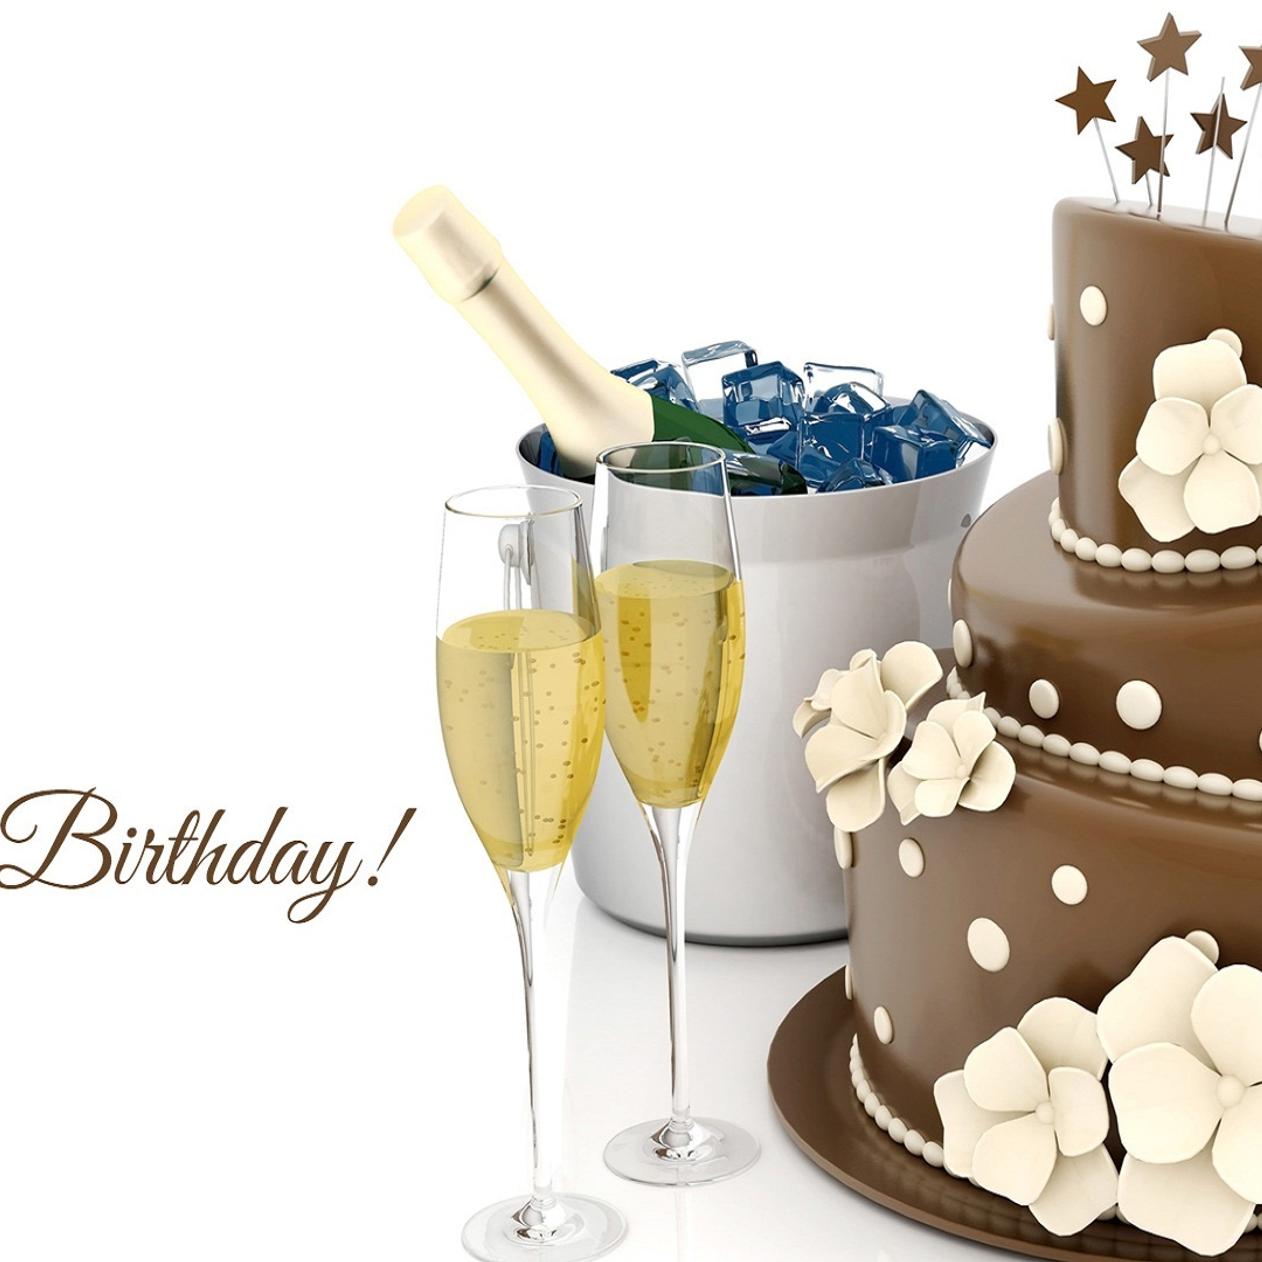 Champagne and chocolate cake - Happy birthday